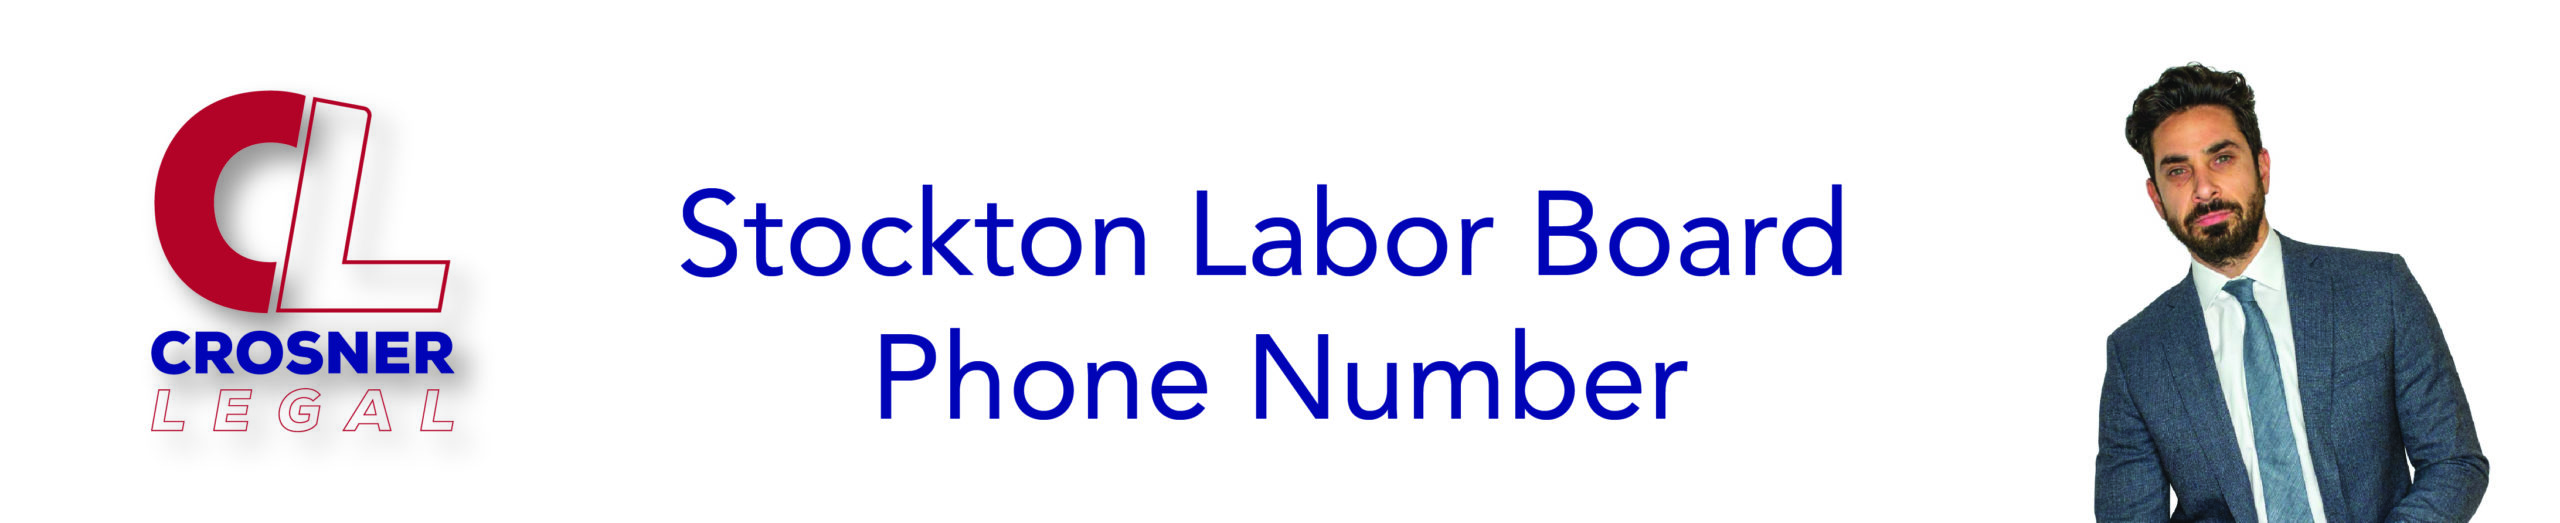 Stockton Labor Board Phone Number